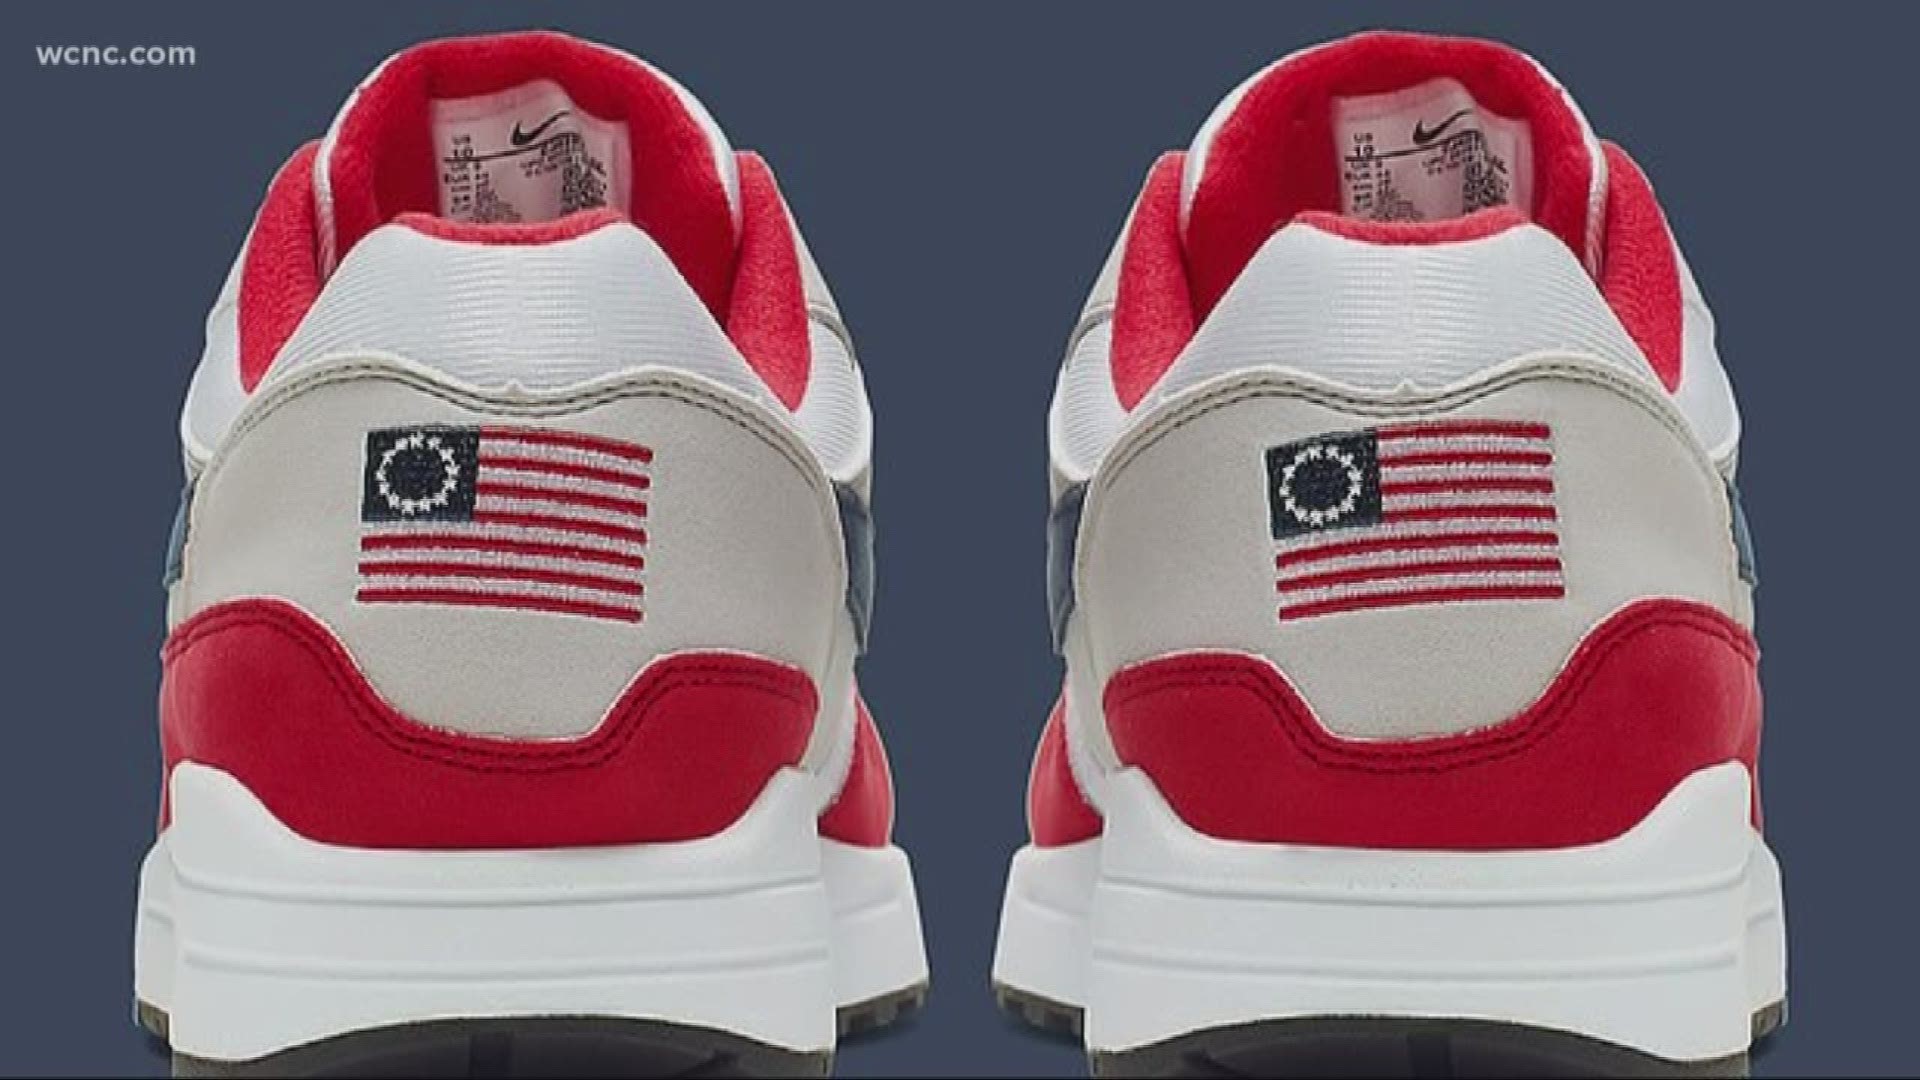 nike shoe with flag